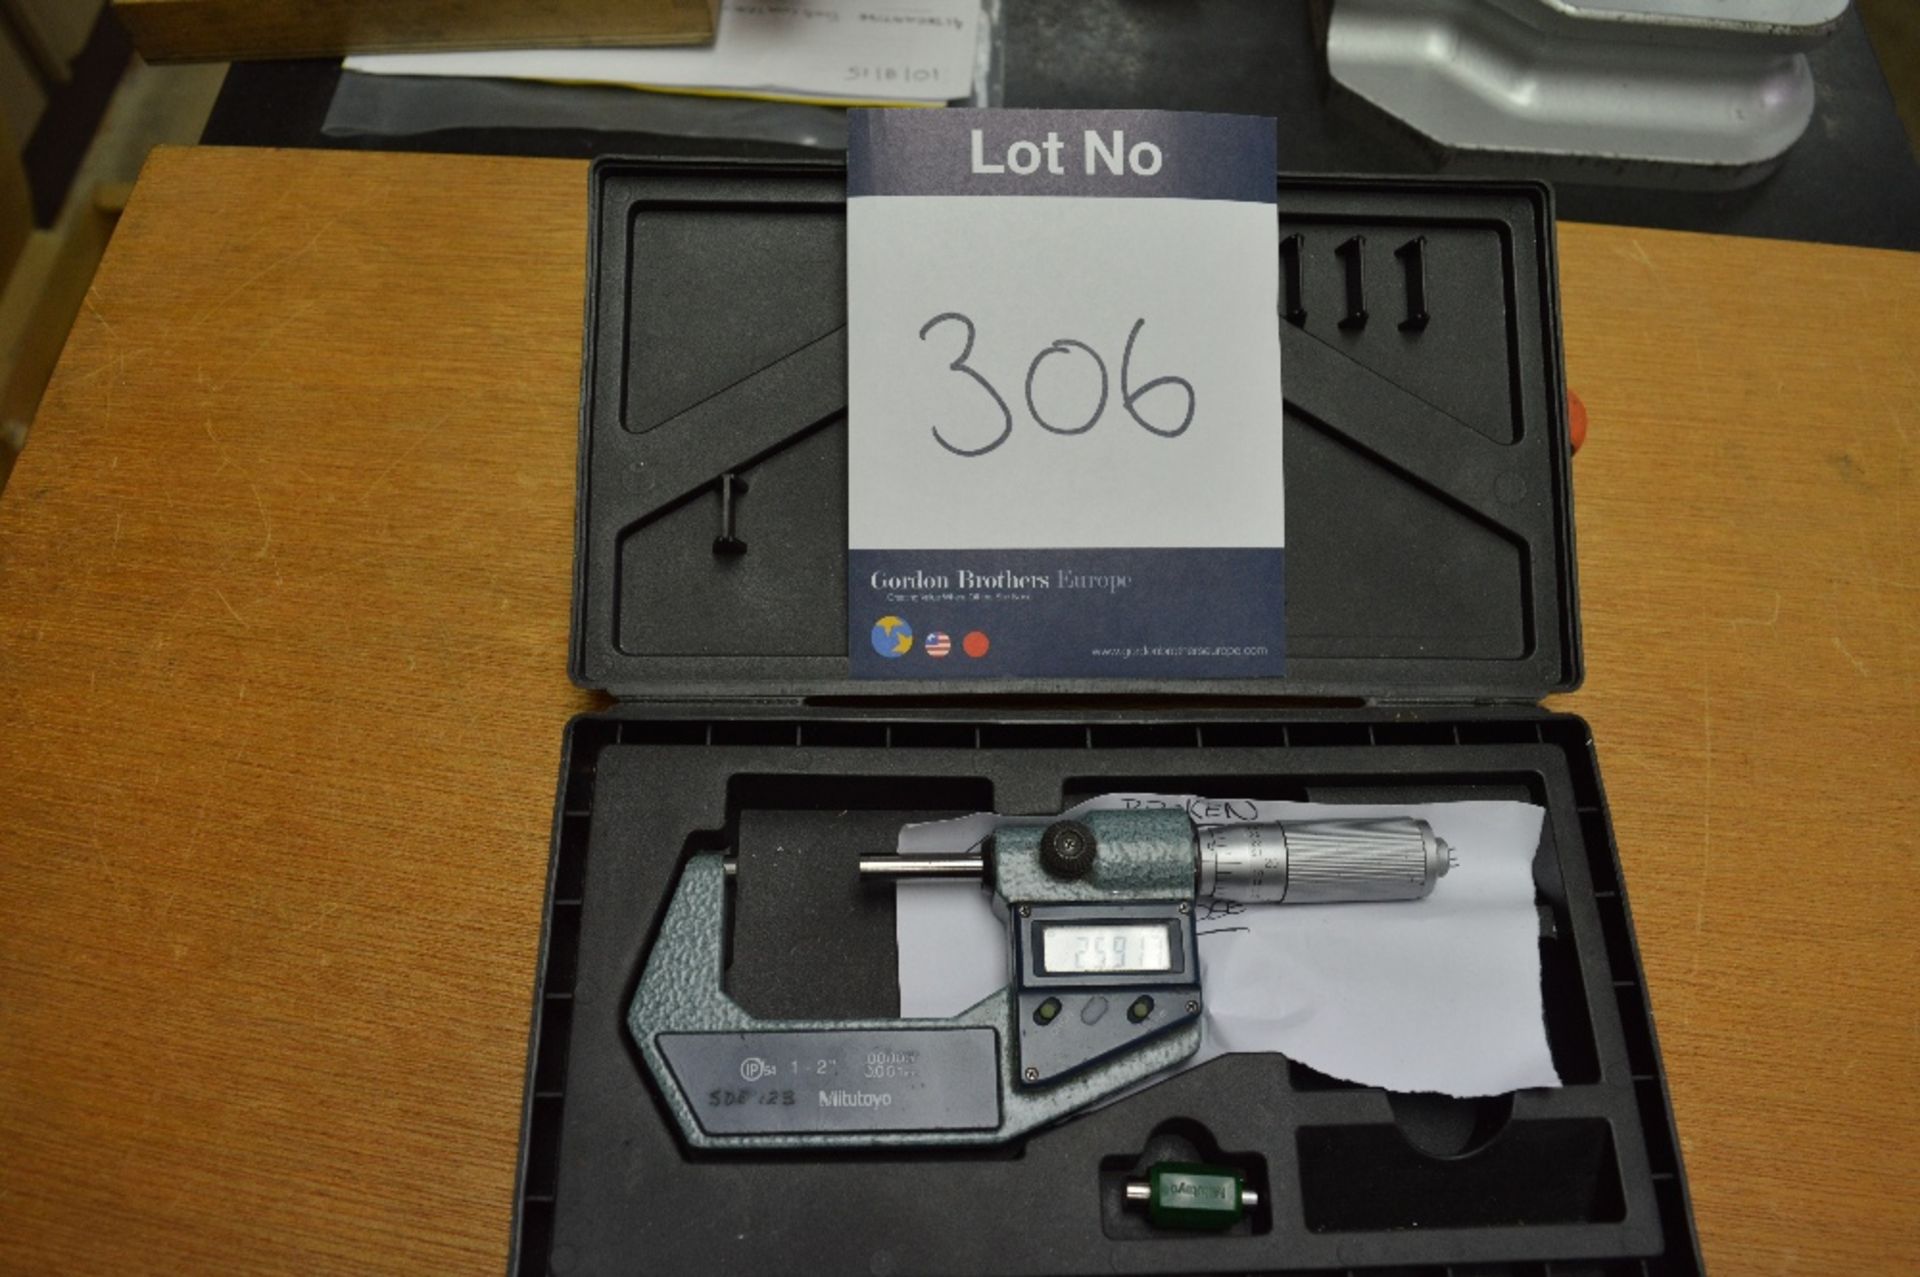 Mitutoyo 1-2" Digital Micrometer
Serial Number: SD